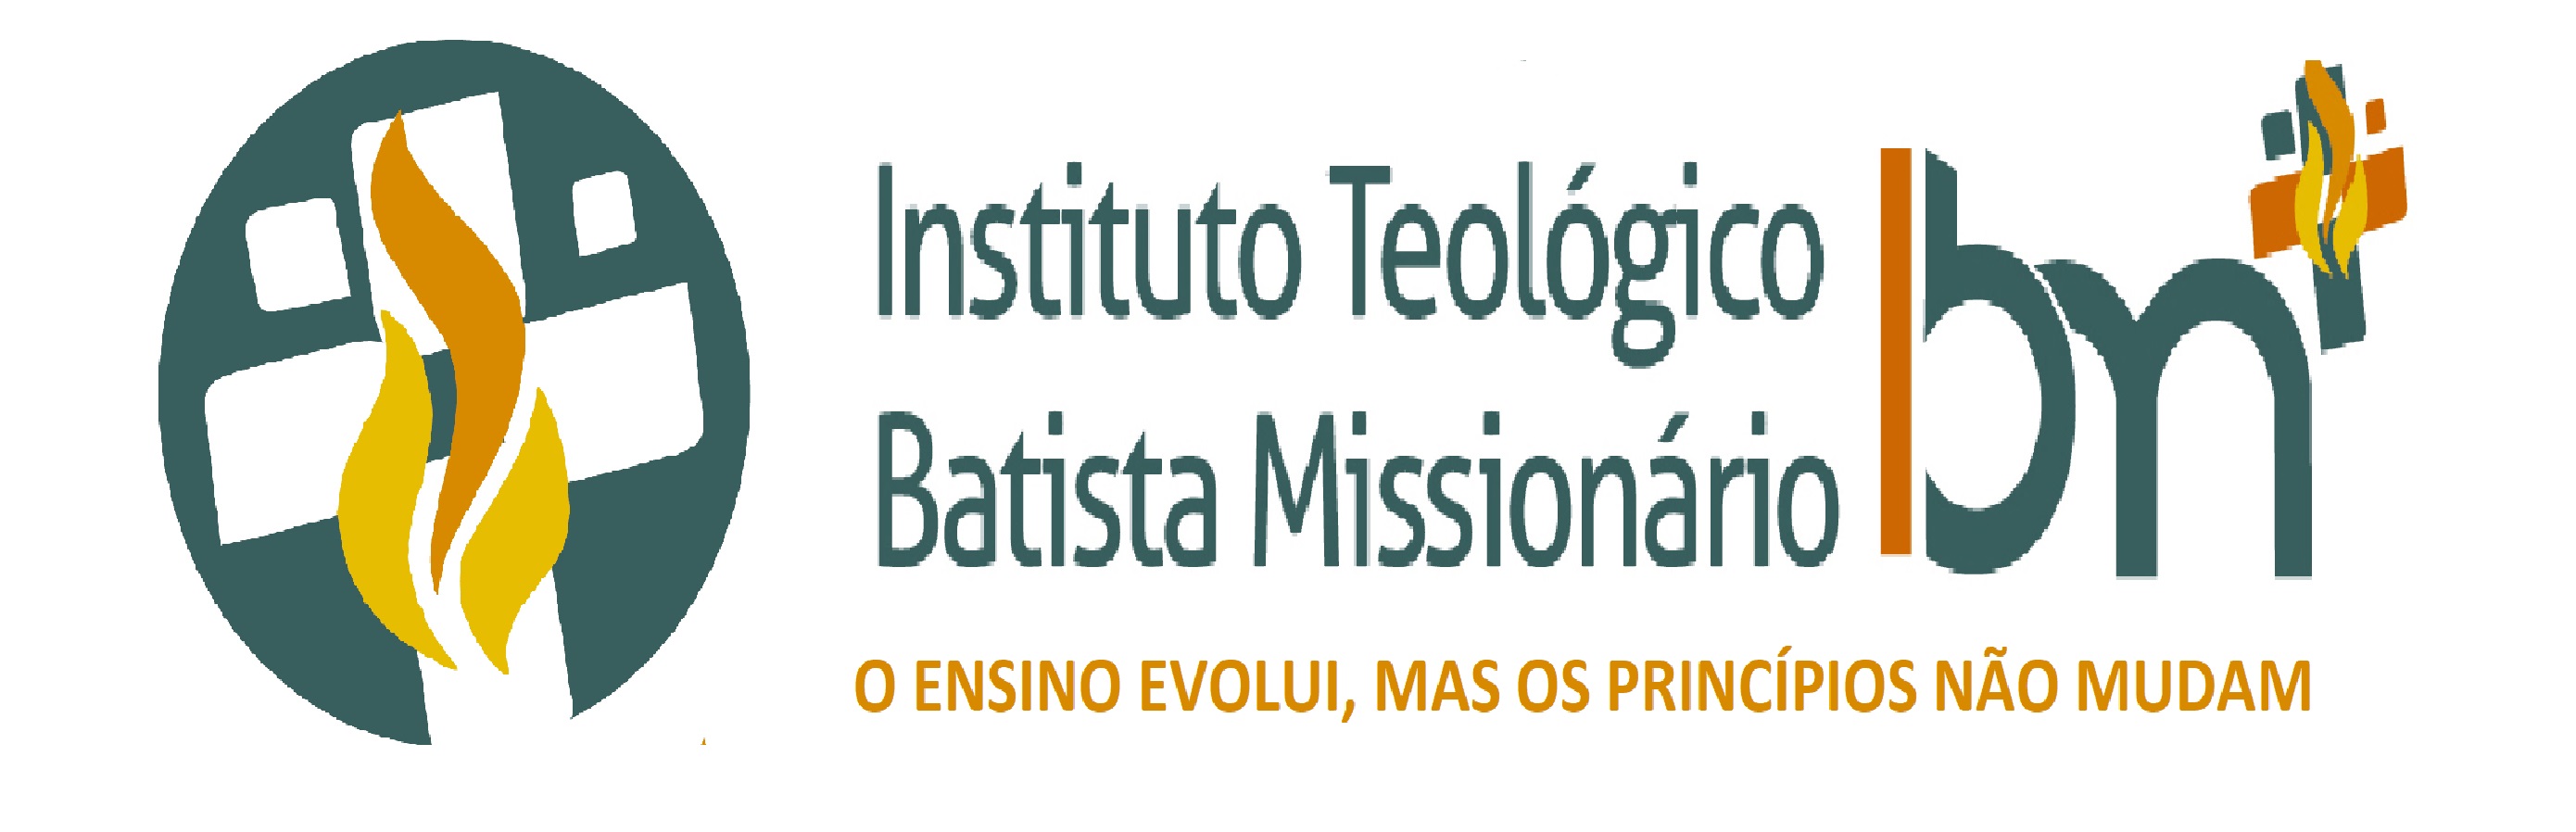 Instituto Teológico Batista Missionário